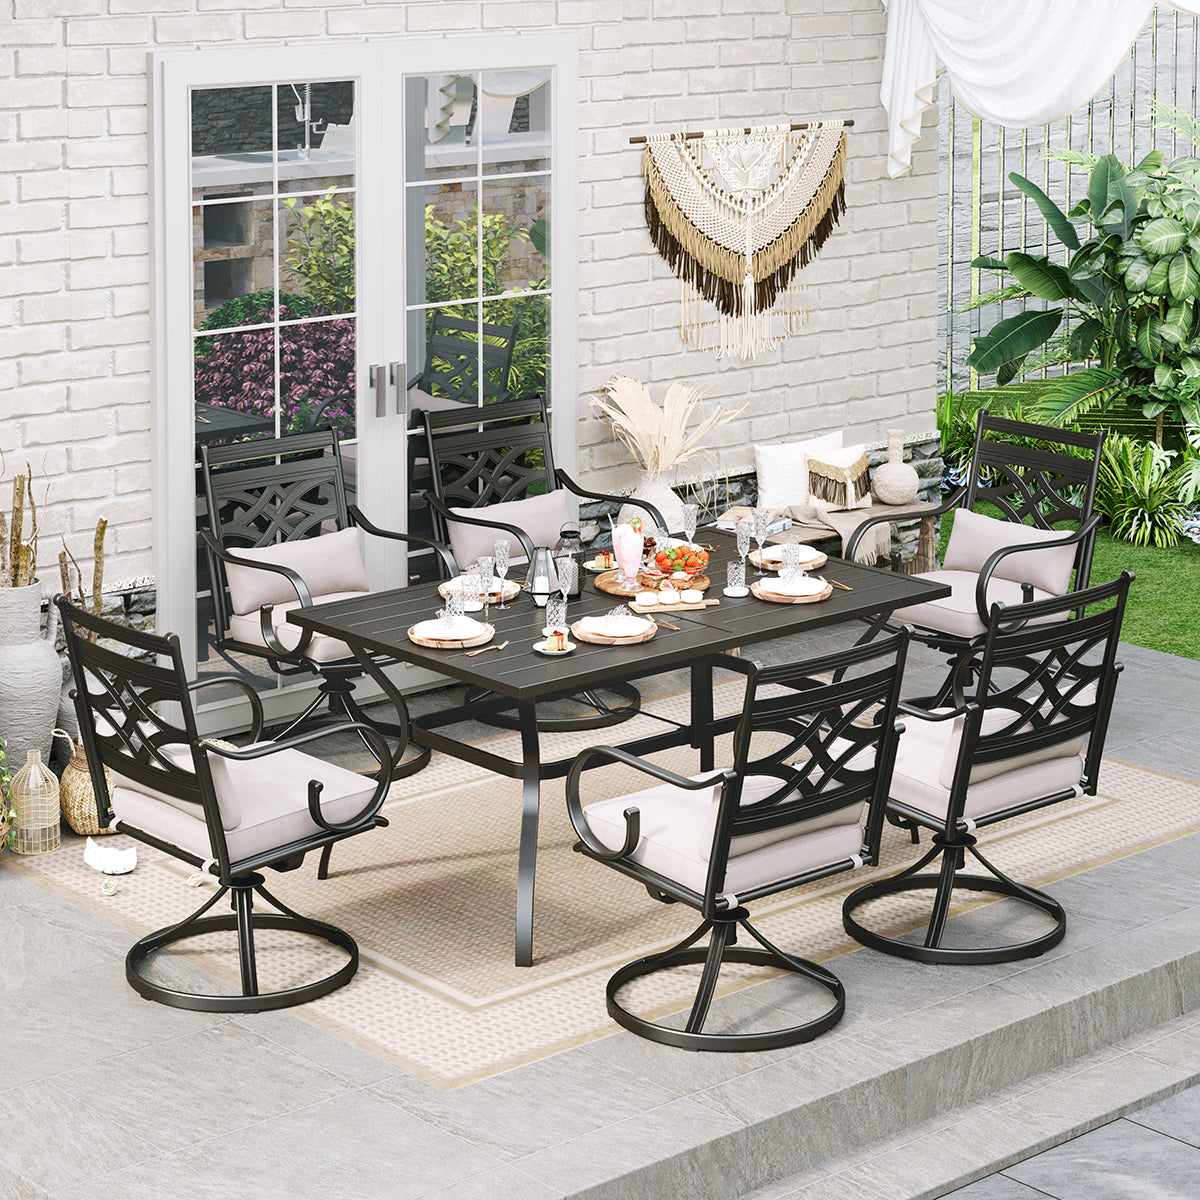 MFSTUDIO 7-Piece Steel Table & Elegant Cast Iron Pattern Swivel Dining Chairs Patio Dining Set